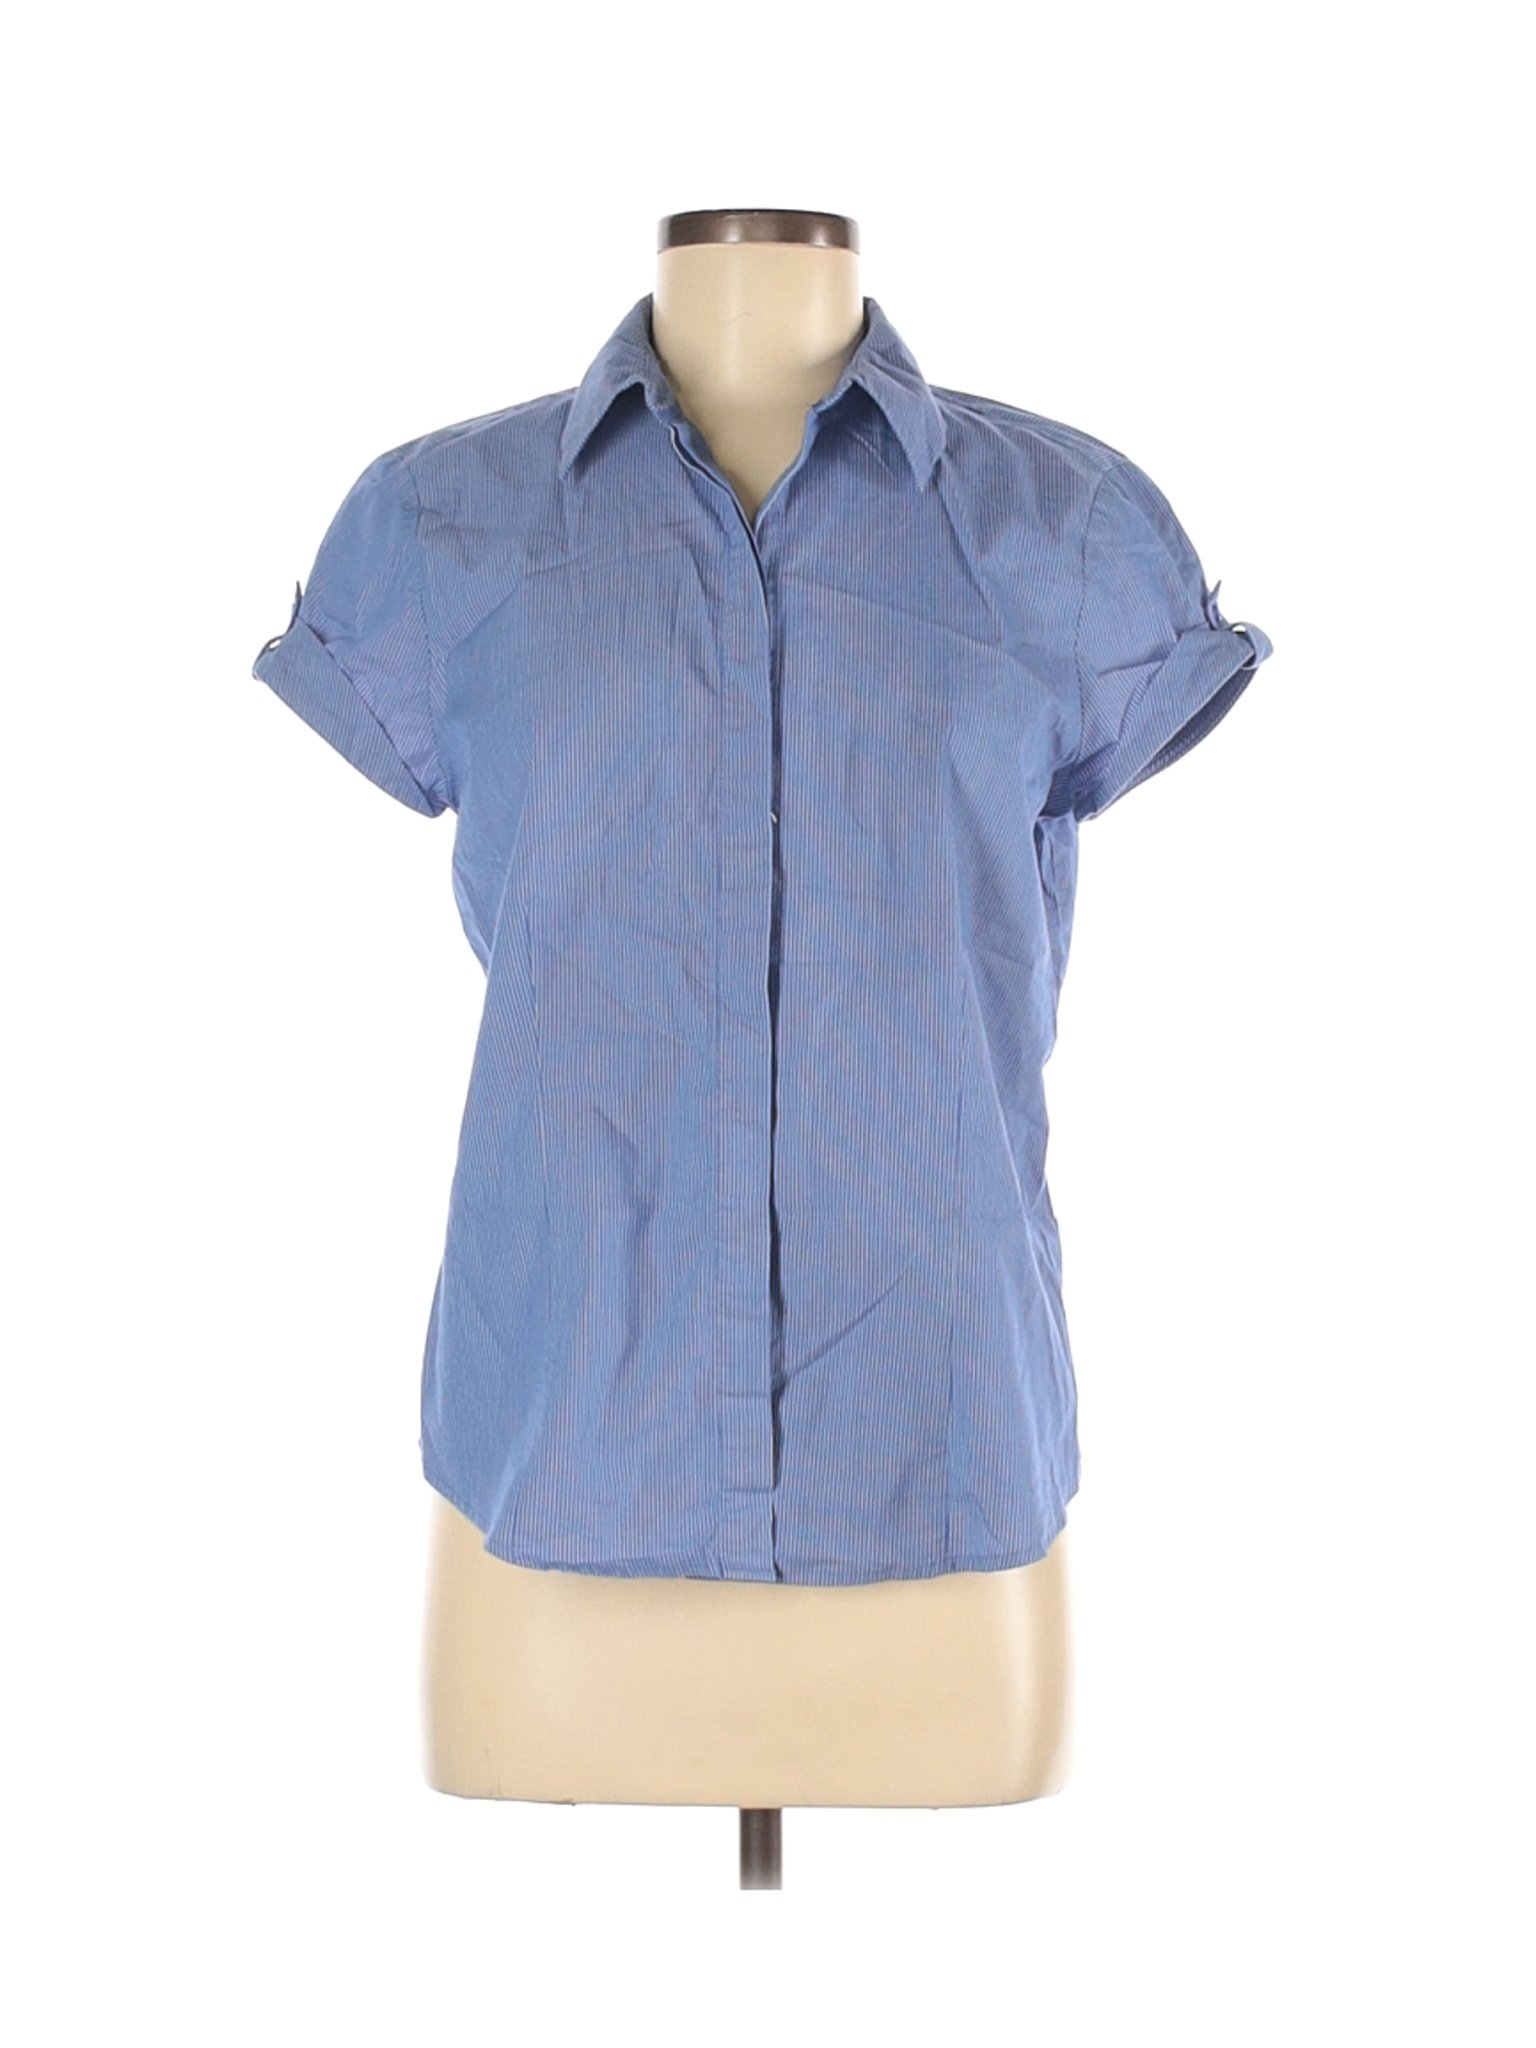 Liz Claiborne Women Blue Short Sleeve Button-Down Shirt M | eBay